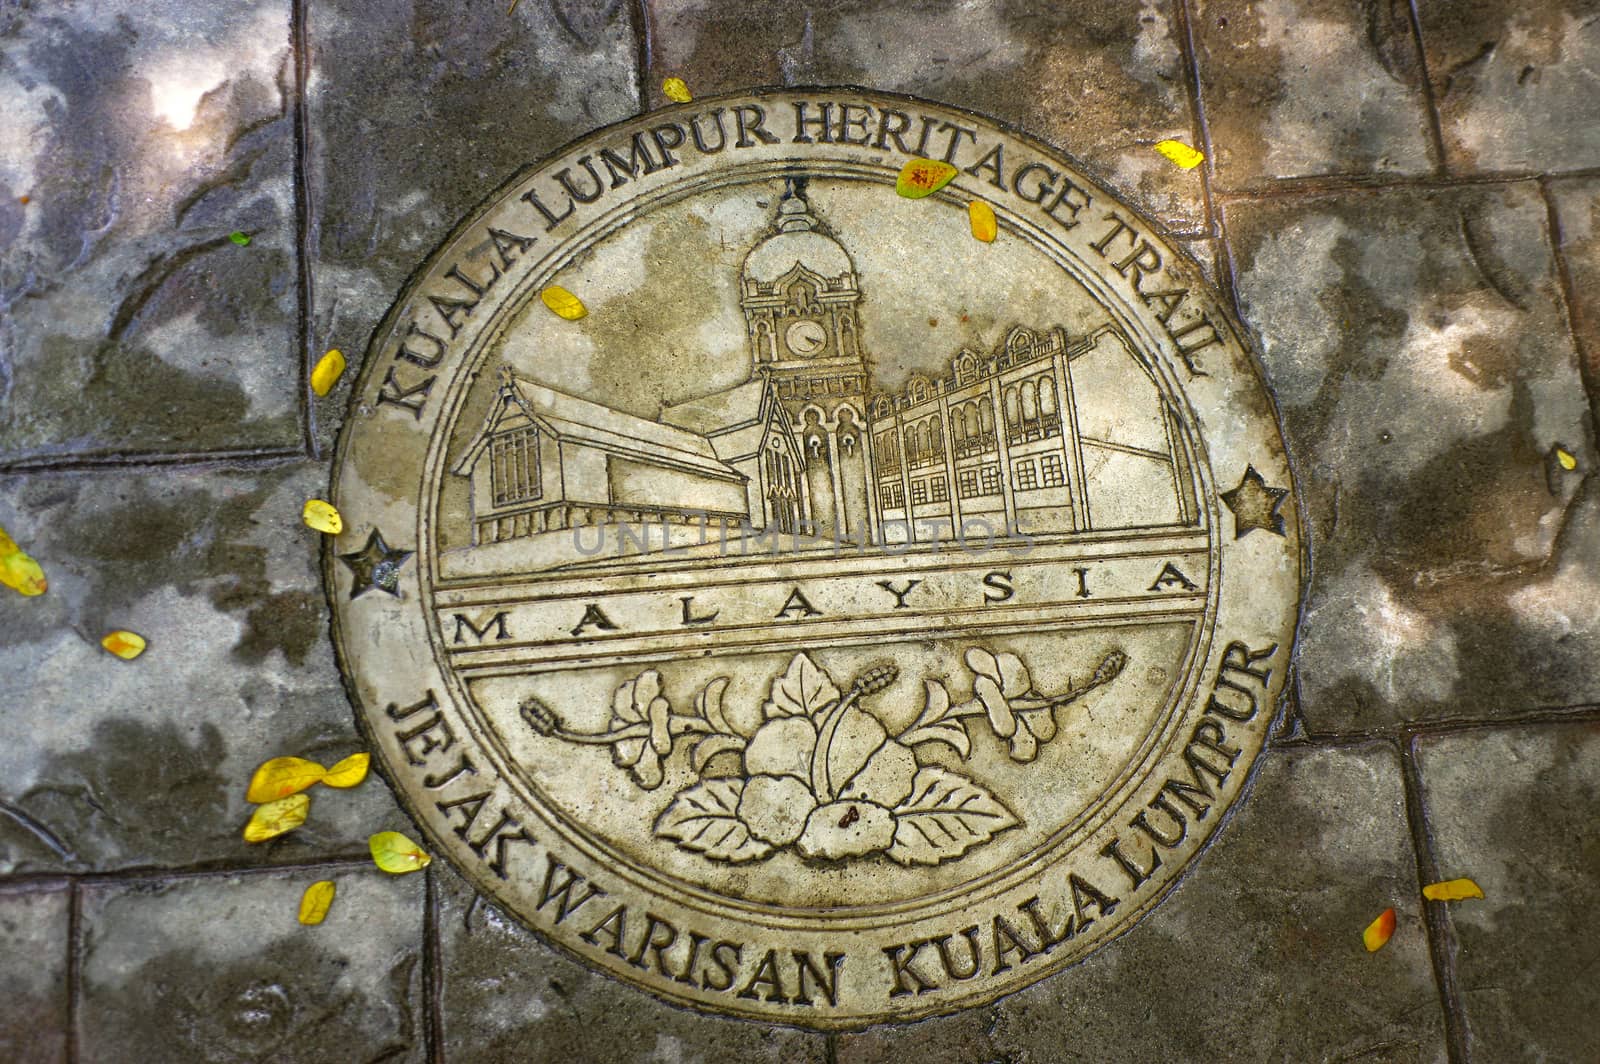 KUALA LUMPUR, MALAYSIA - JANUARY 16, 2016: round memorial pate on ground - symbol of the city. by evolutionnow